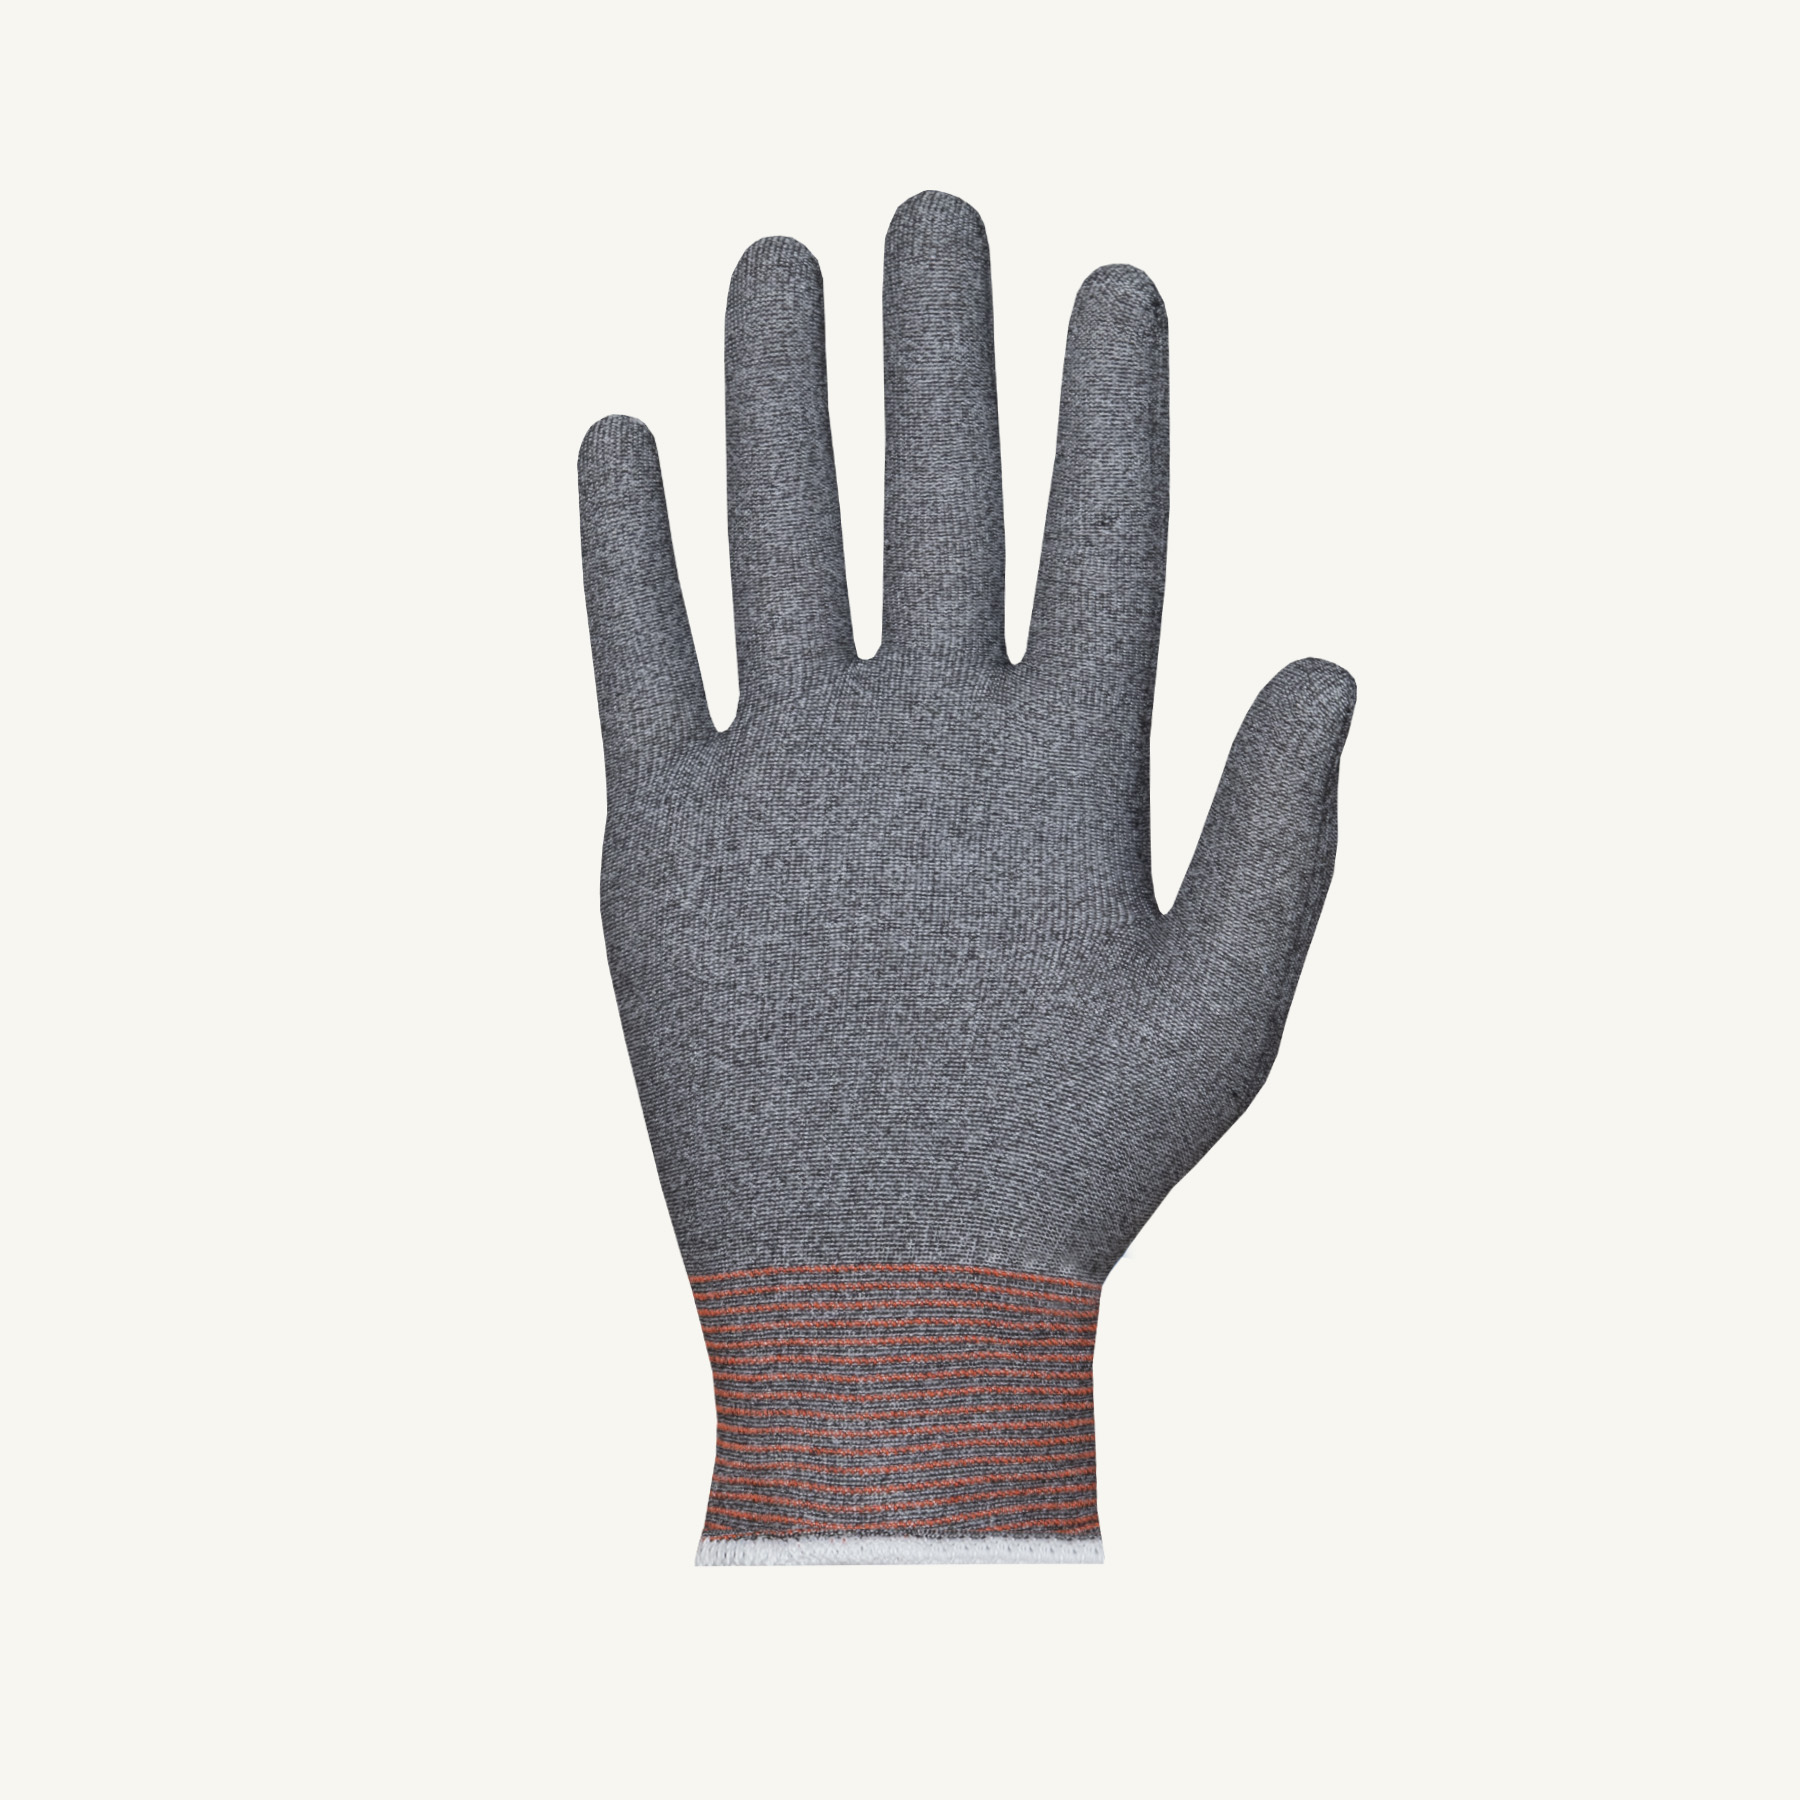 Fish HandlingCleaning Gloves Textured Grip Palm Soft Ghana